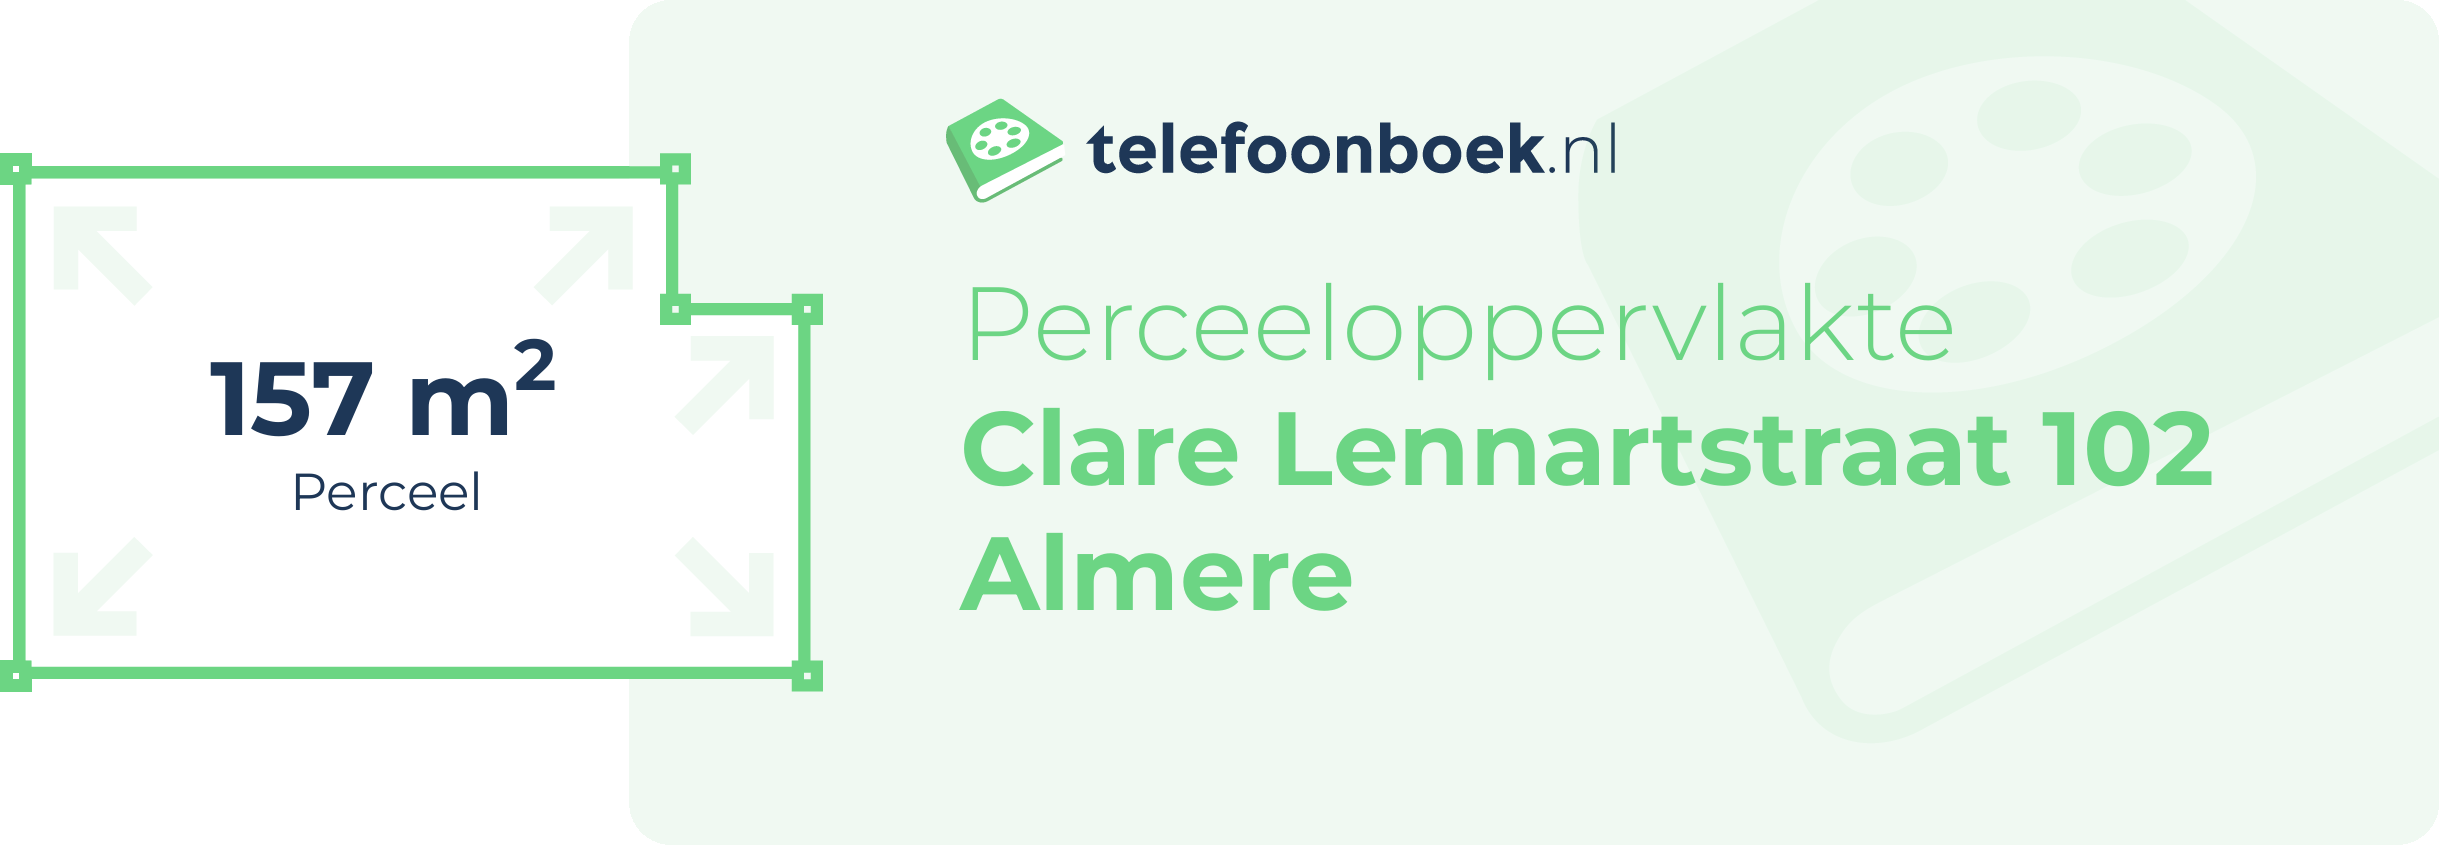 Perceeloppervlakte Clare Lennartstraat 102 Almere